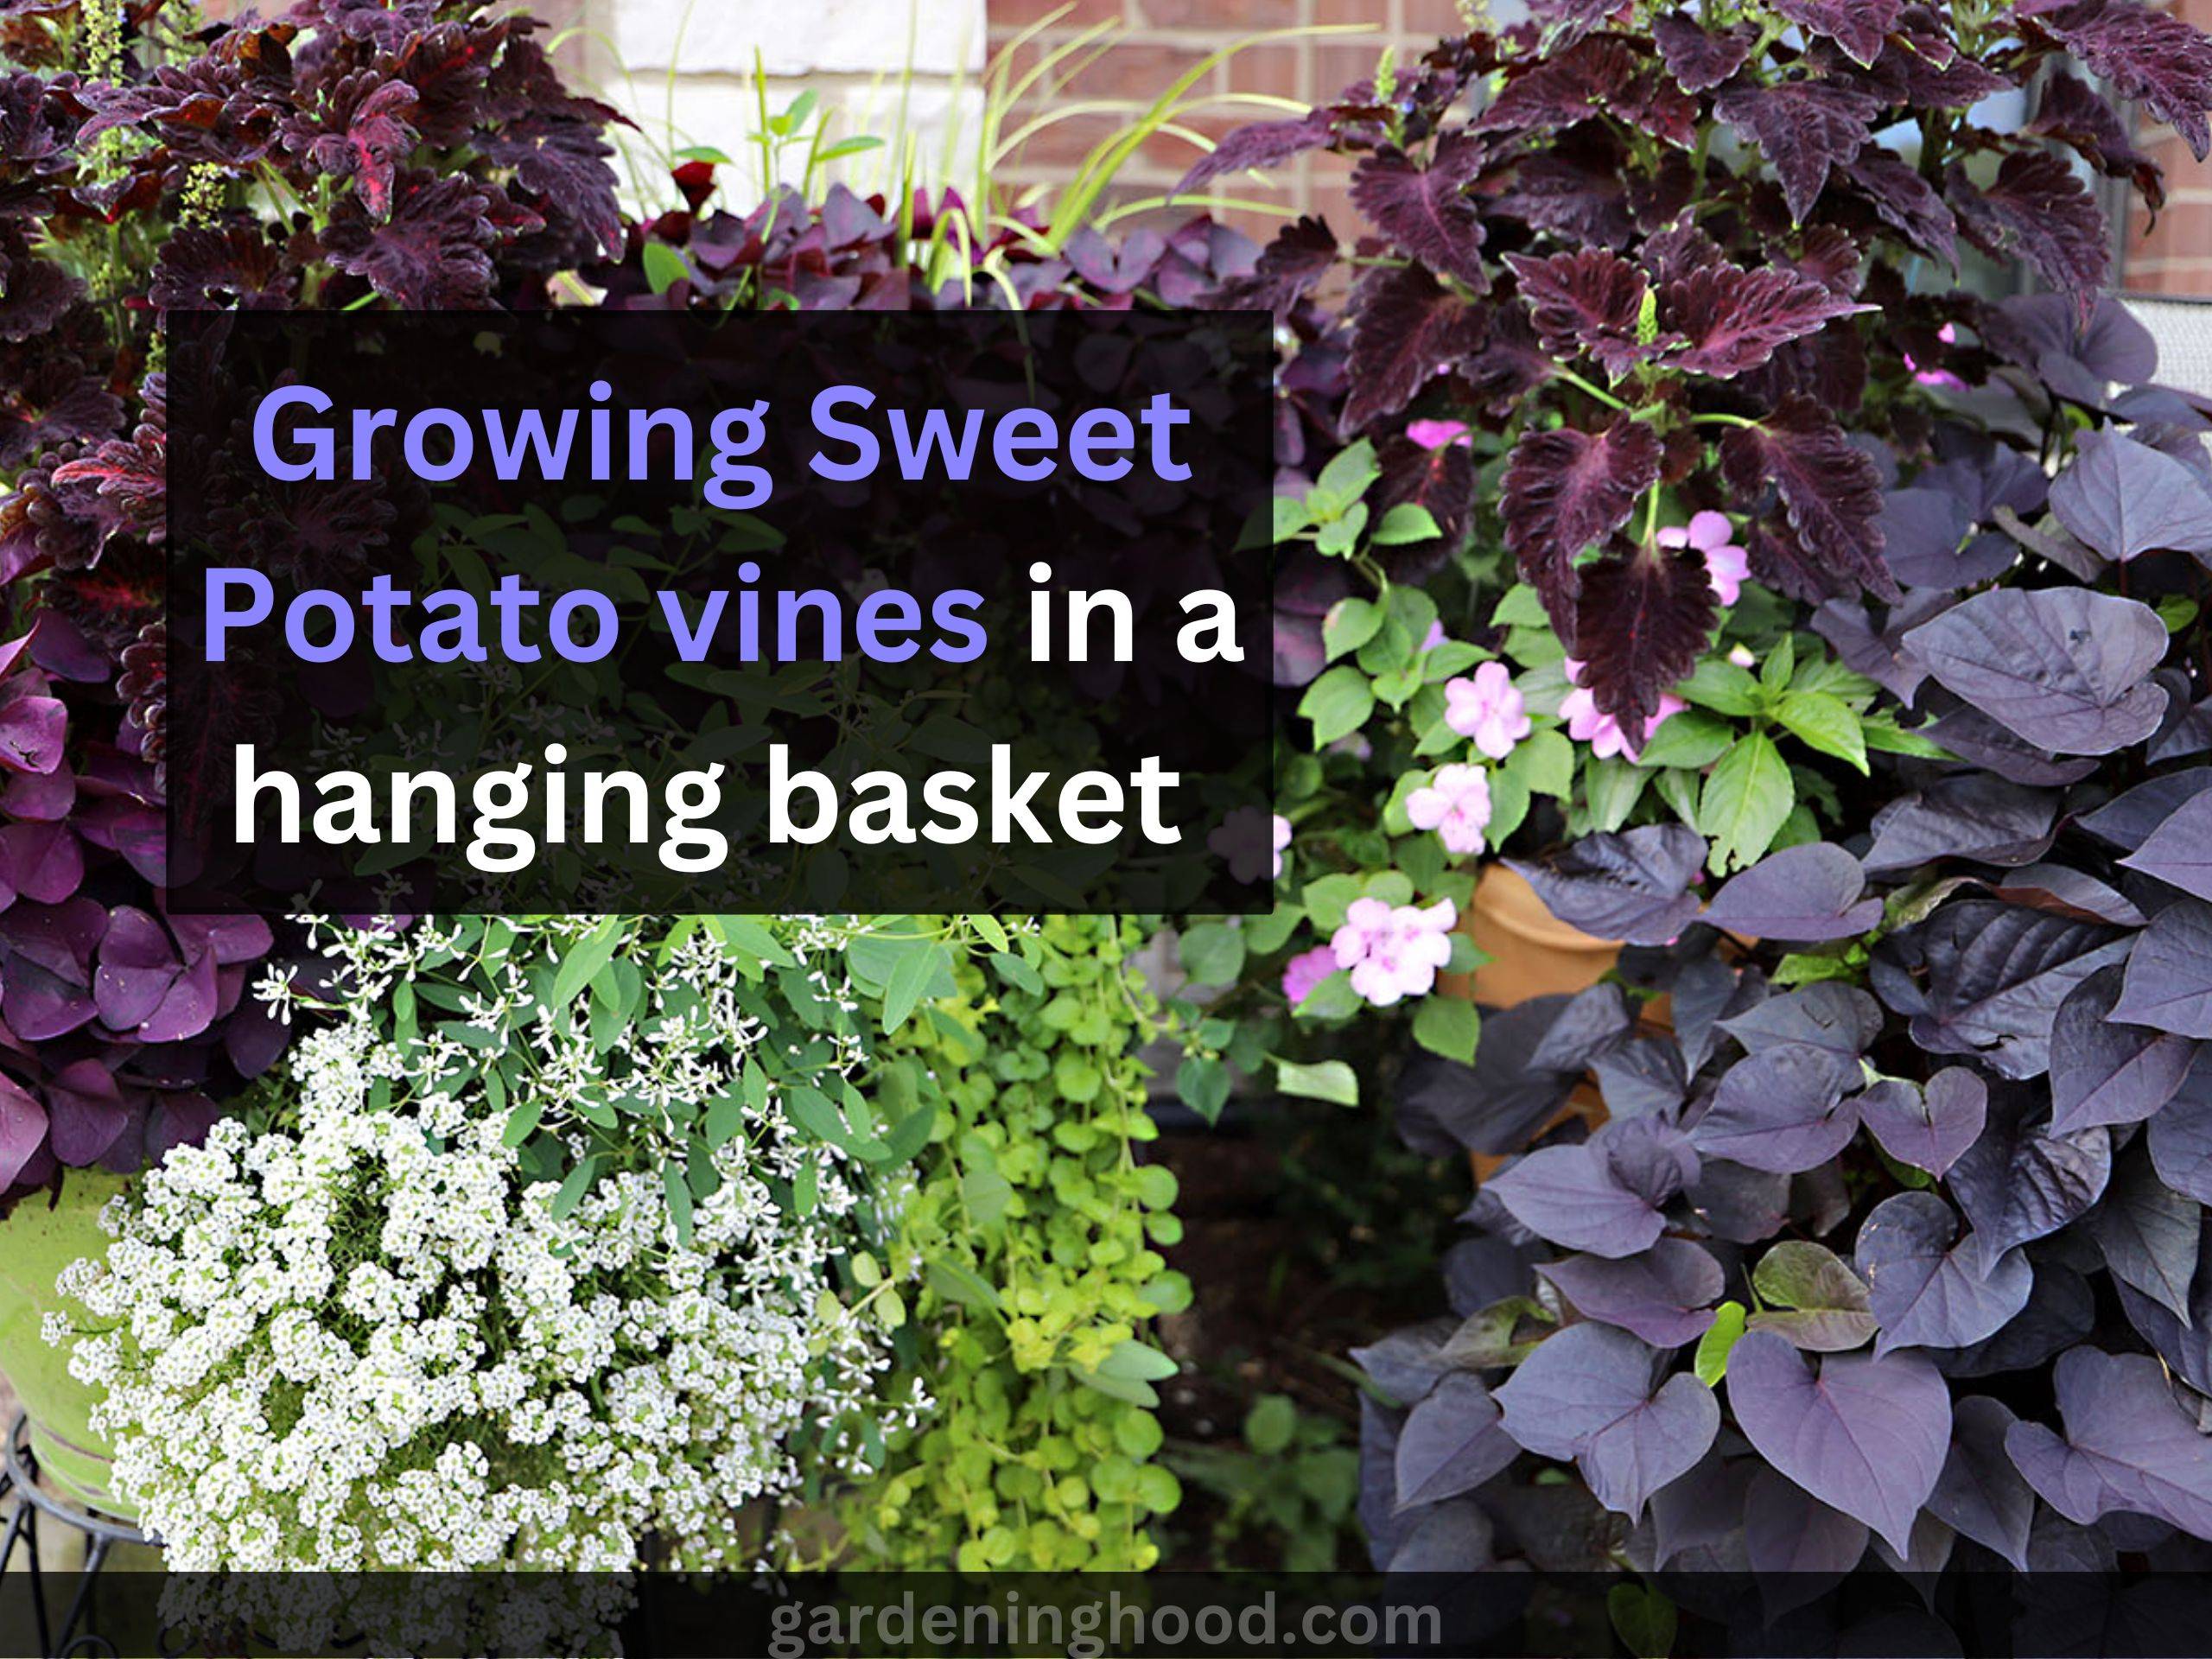 Growing Sweet Potato vines in a hanging basket 